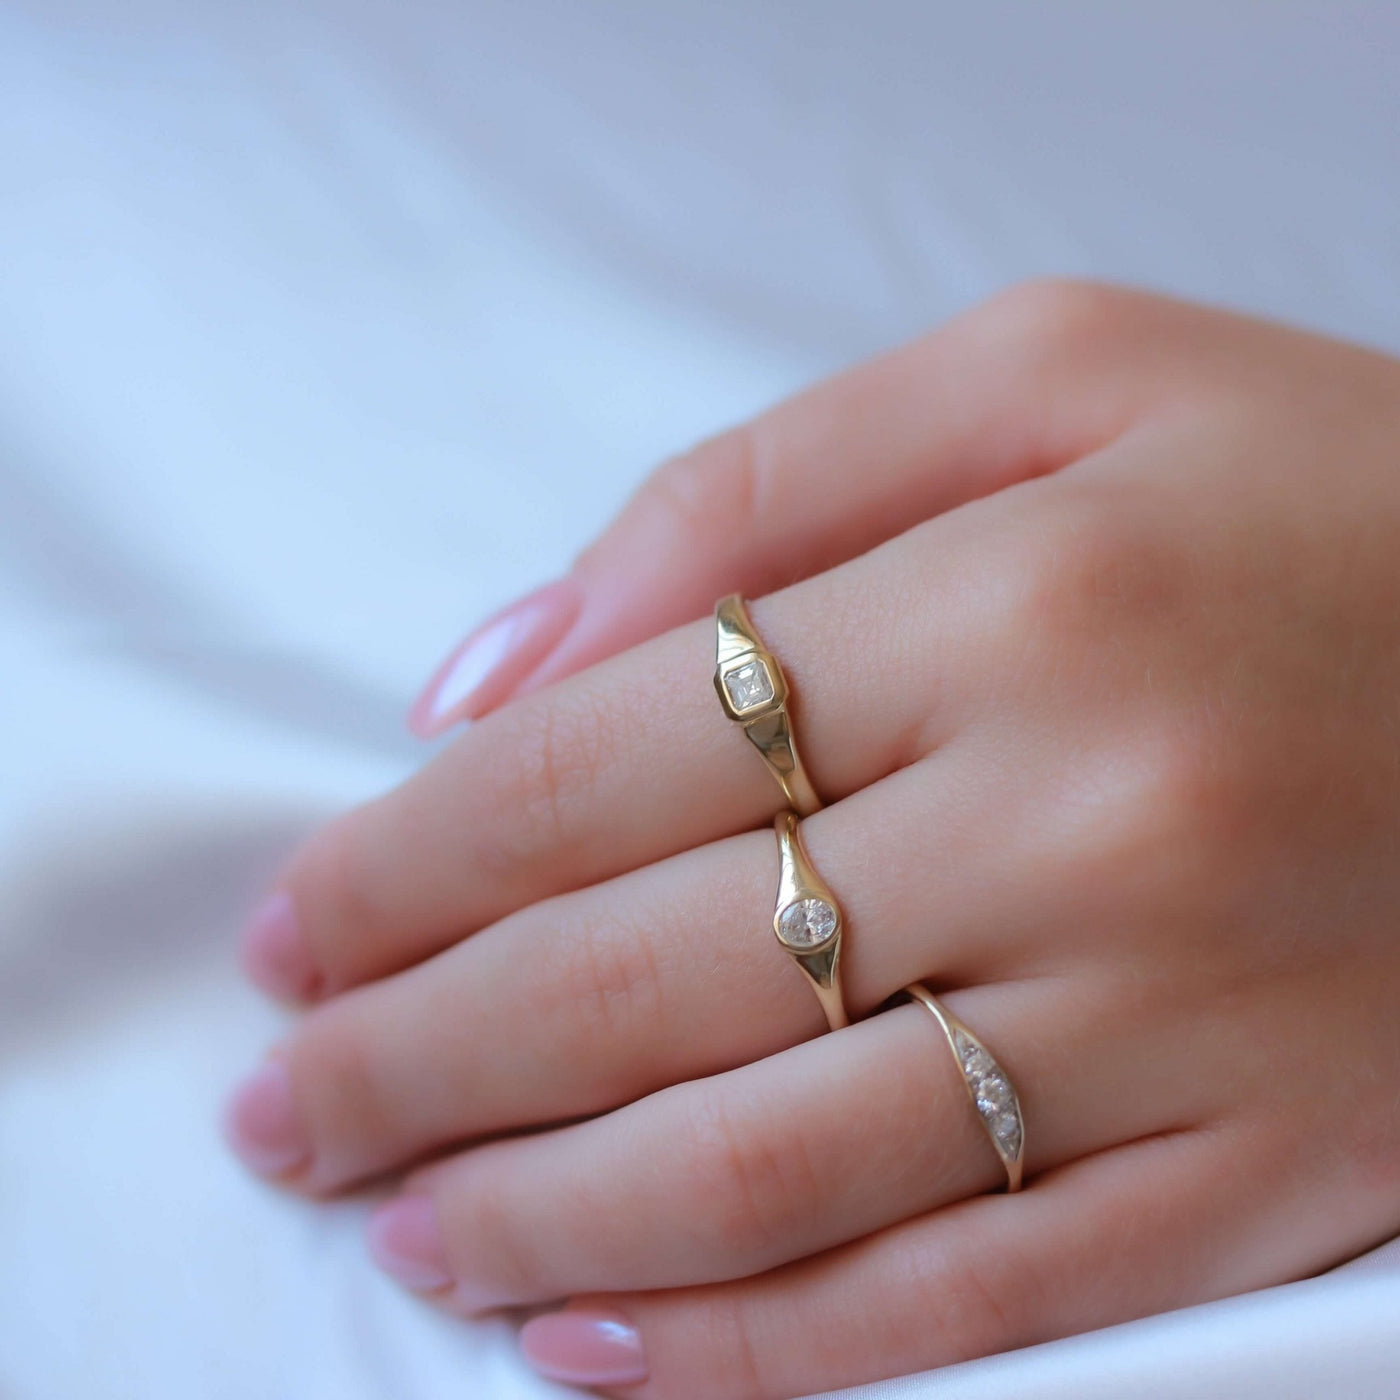 Kim Ring 14K Gold White Diamonds Rings 